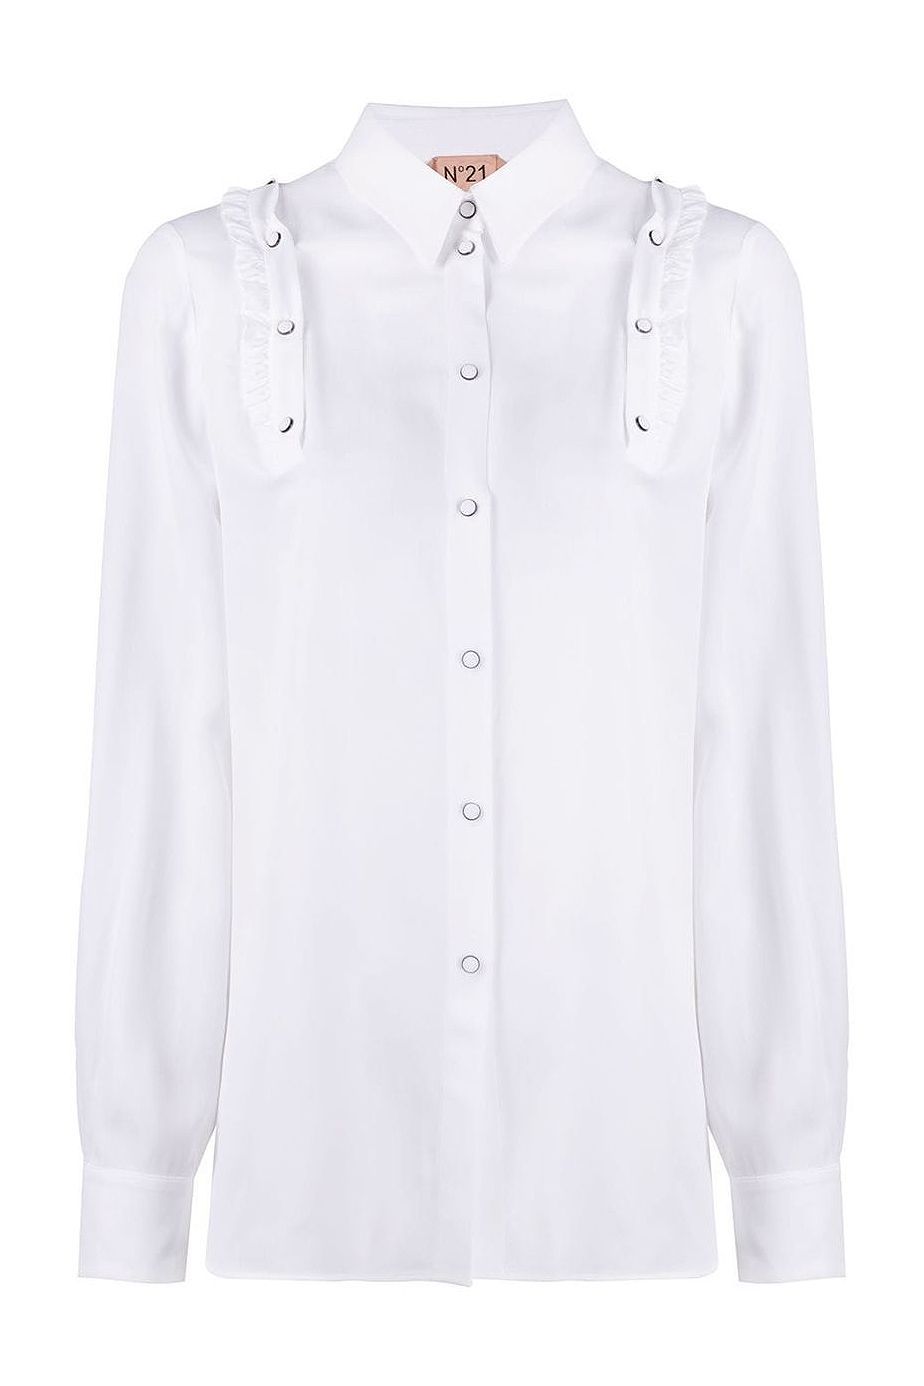 best women's white dress shirt